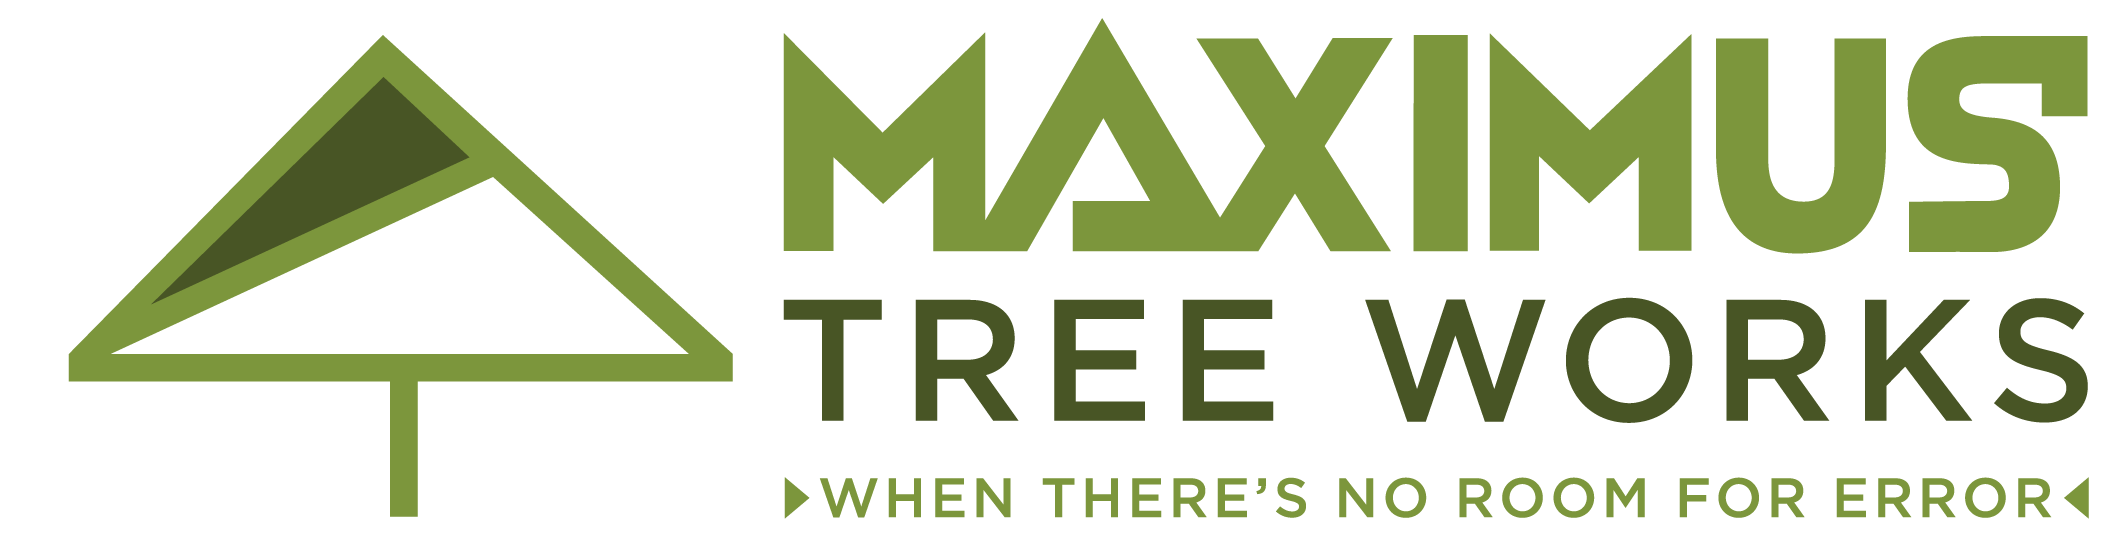 Maximus Tree Works